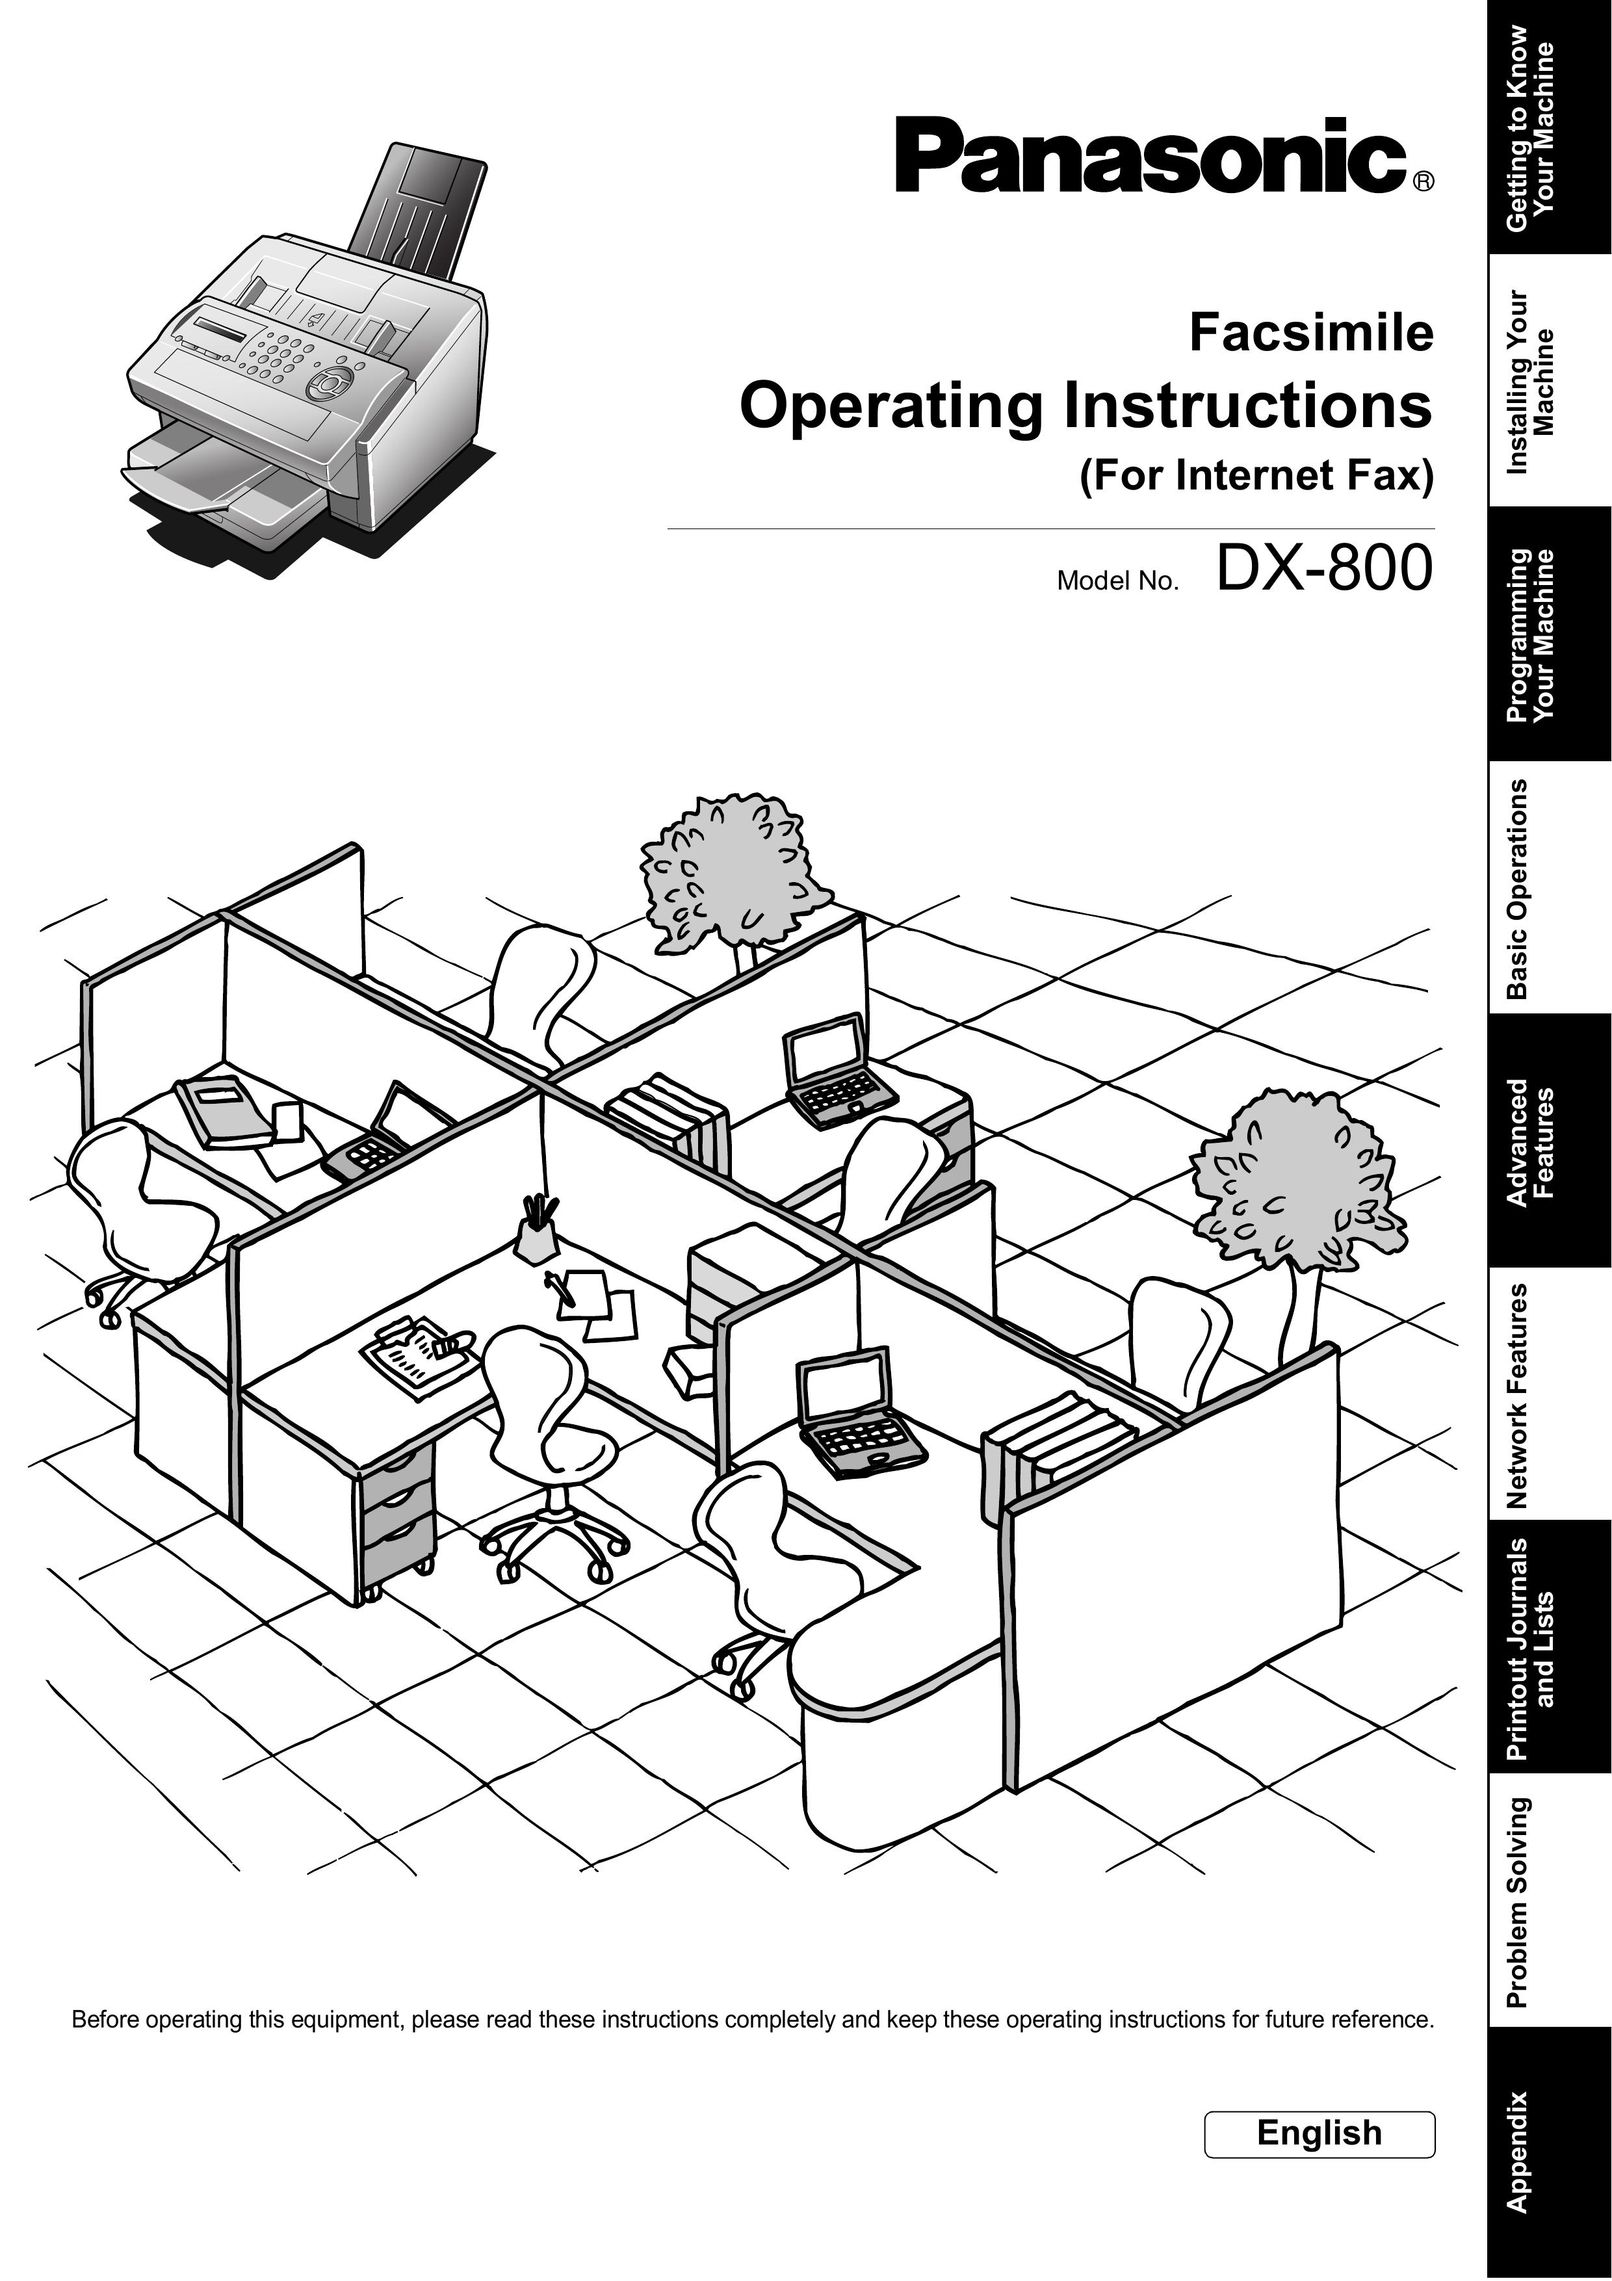 Panasonic DX-800 Fax Machine User Manual